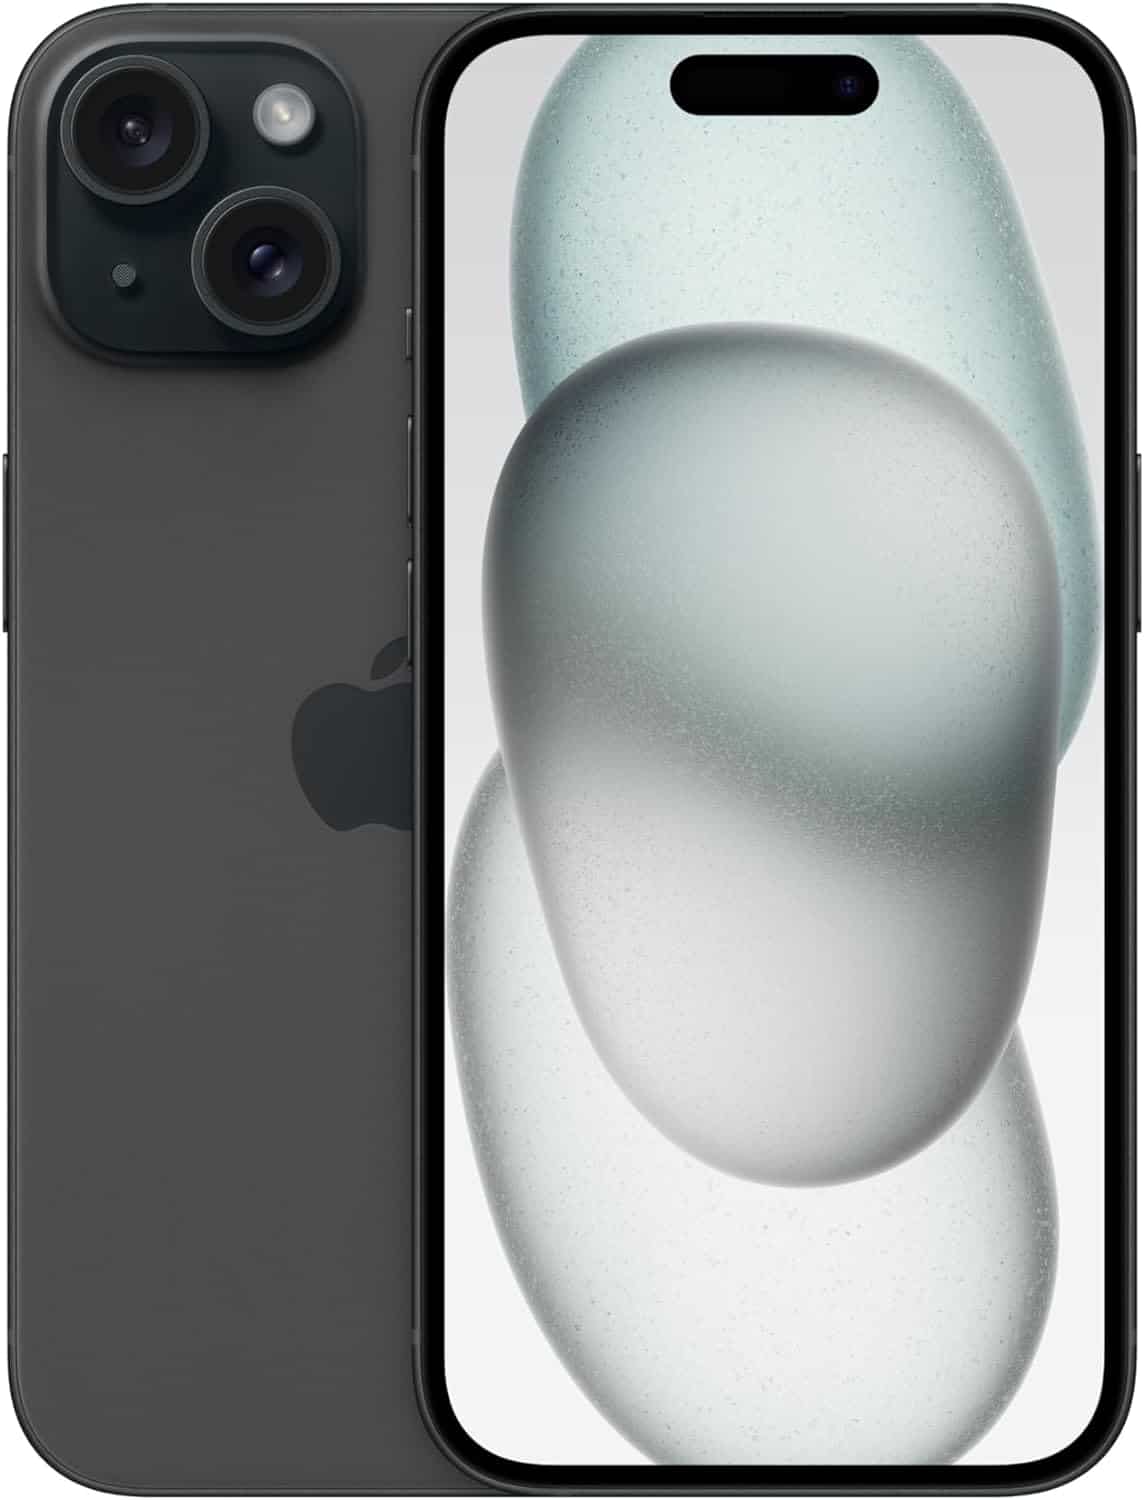 Apple iPhone 11 Pro 64GB Grey with enhanced capabilities and sleek design.